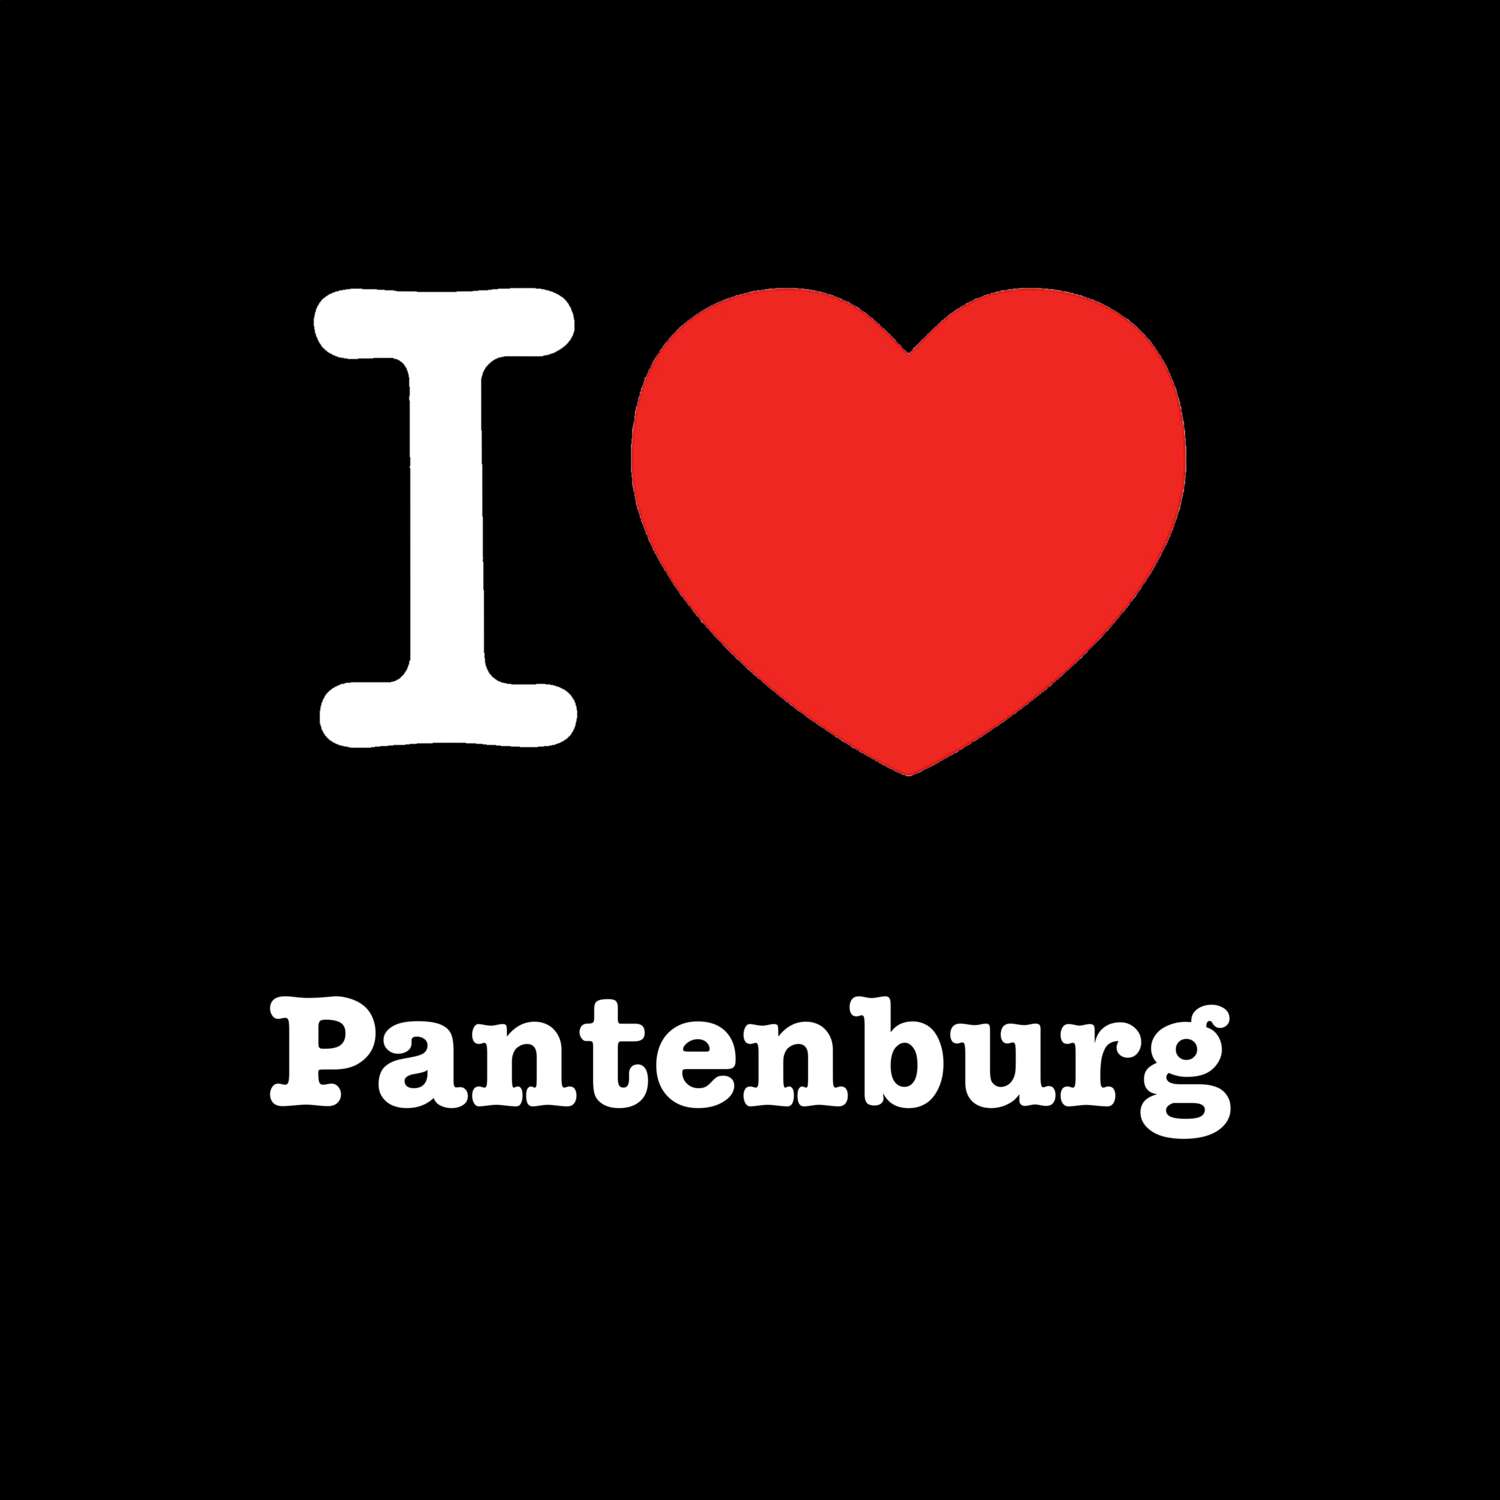 Pantenburg T-Shirt »I love«